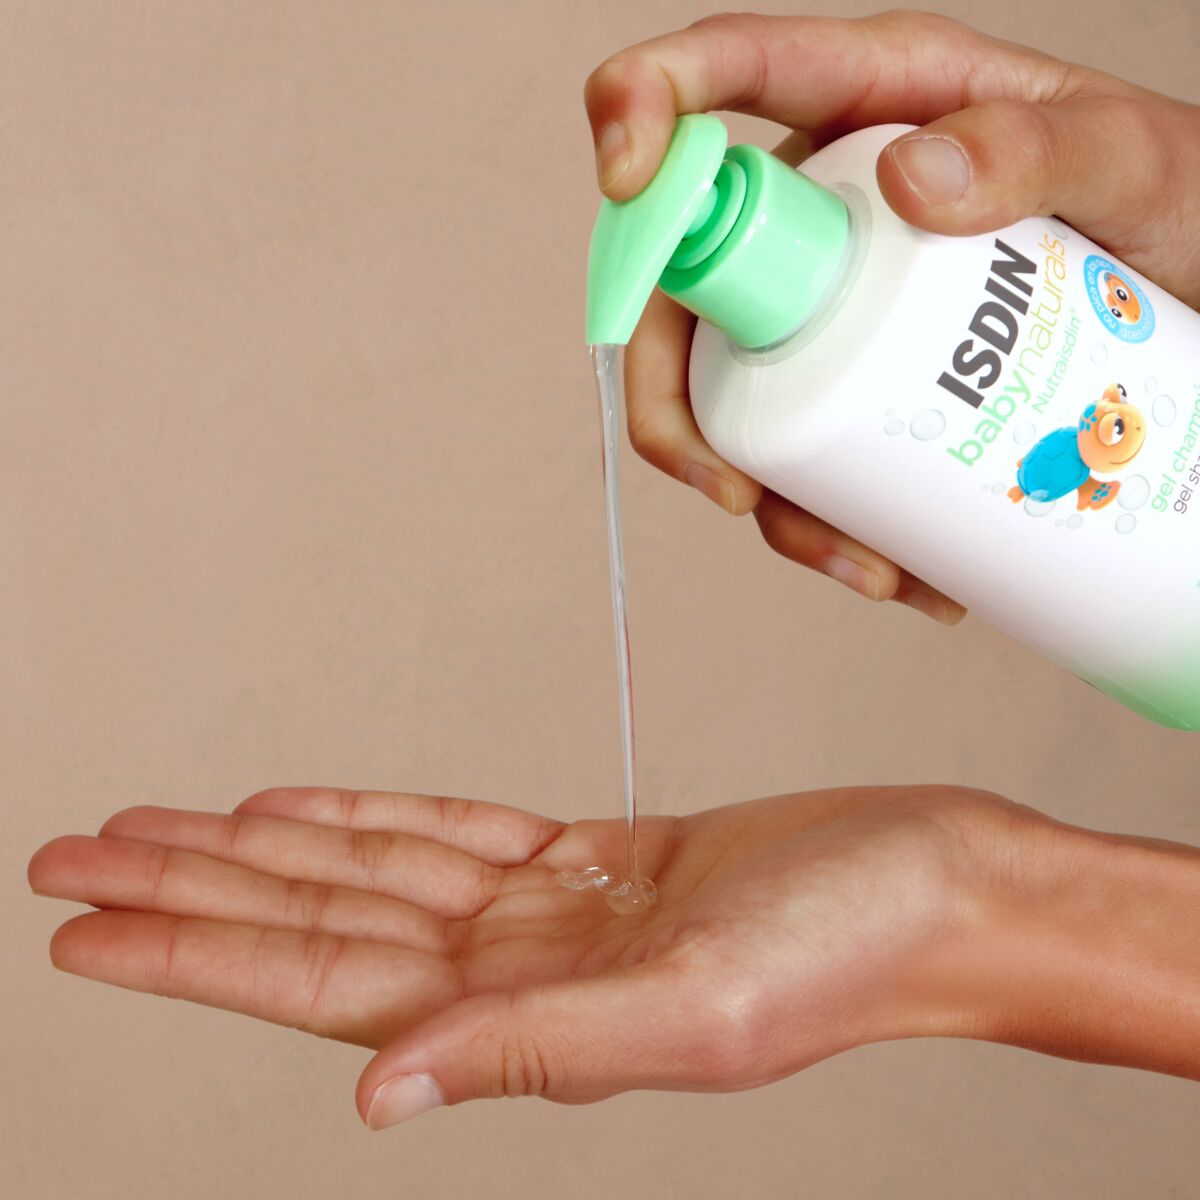 Baby Naturals Gel Champú ISDIN Suave higiene diaria precio